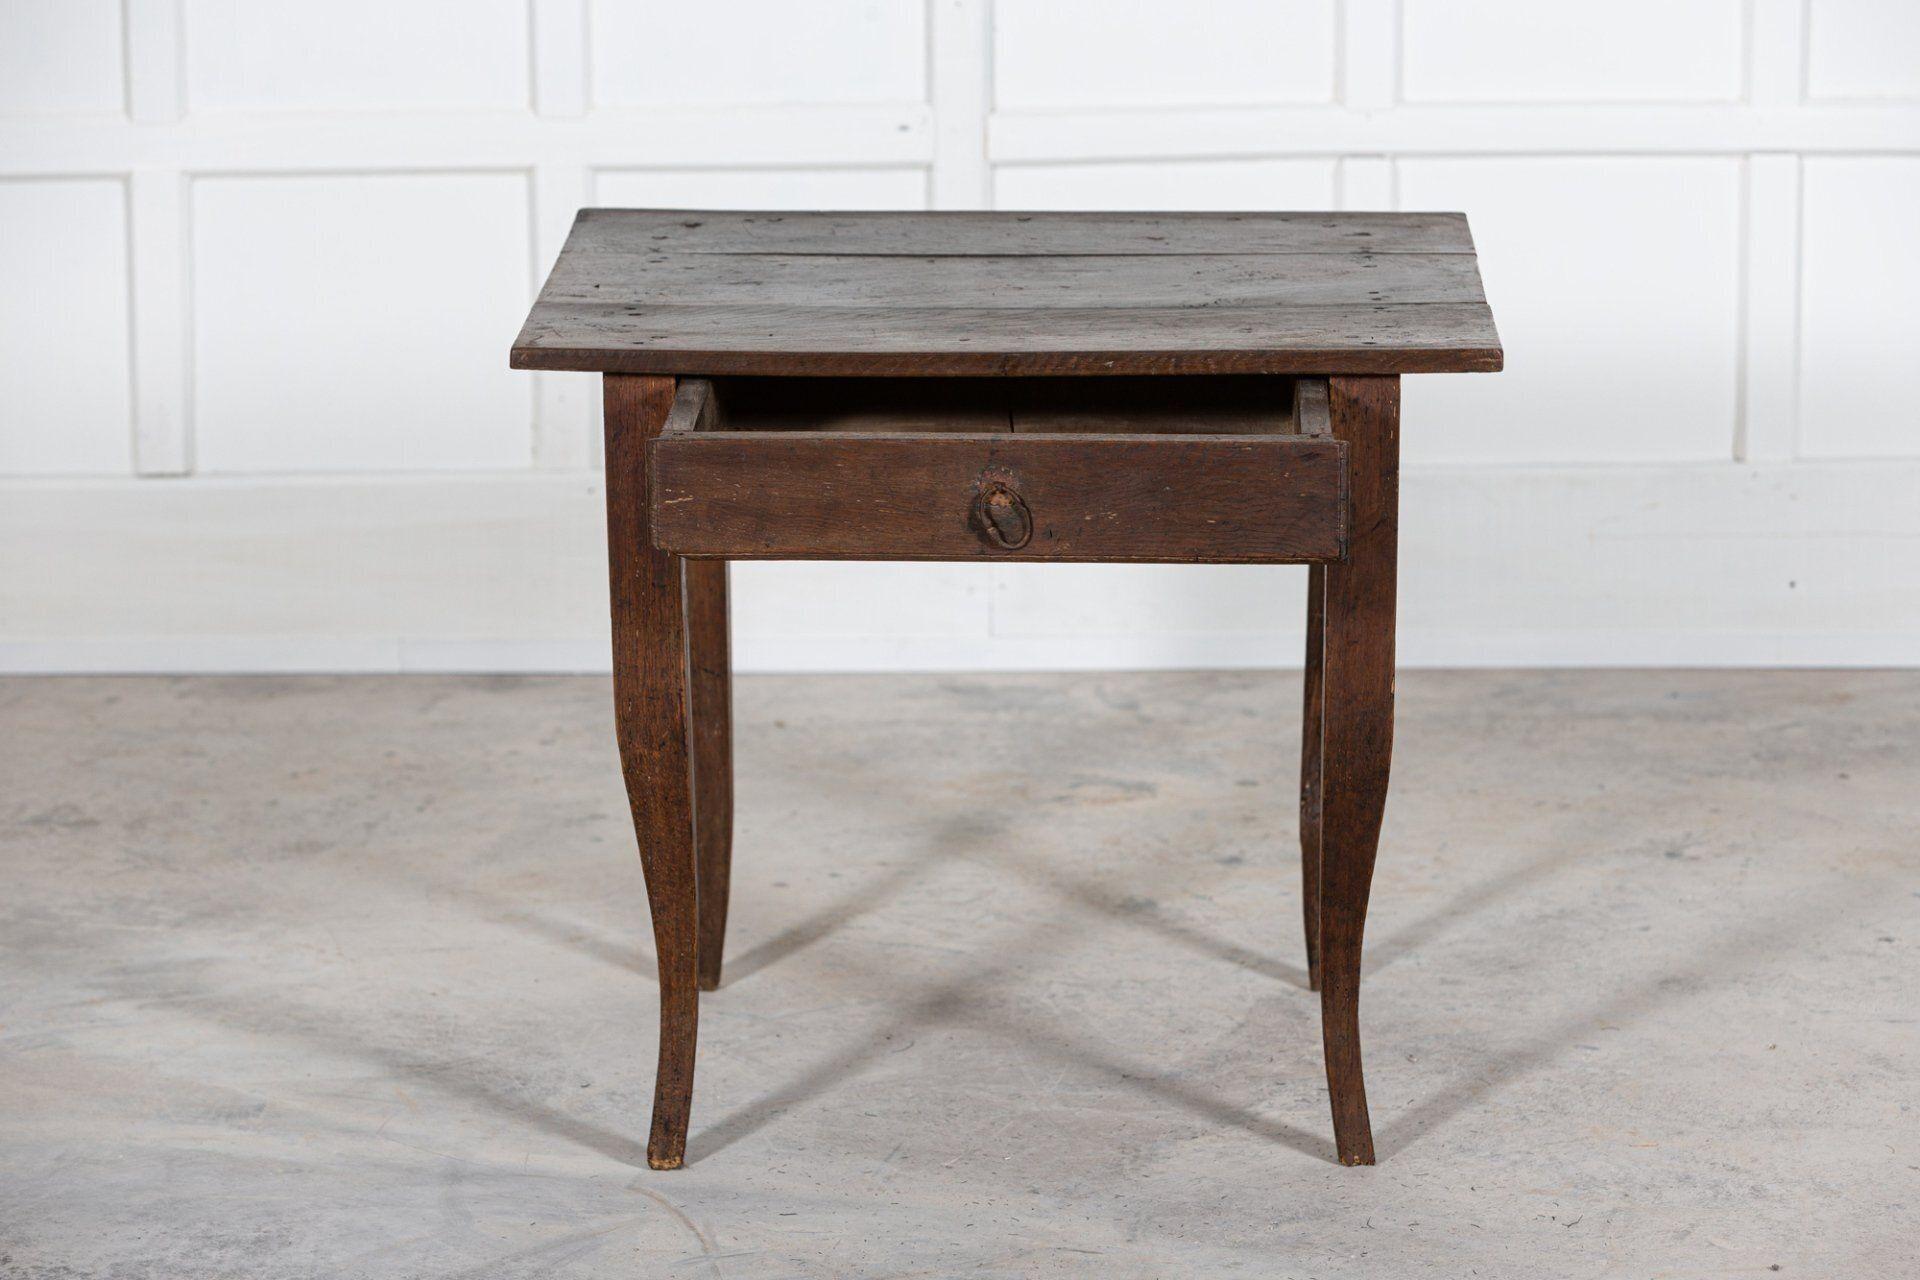 Circa 1760.
Spanish 18th C provincial oak side table.
Sku 1123.
Measures: W75 x D59 x H66cm.